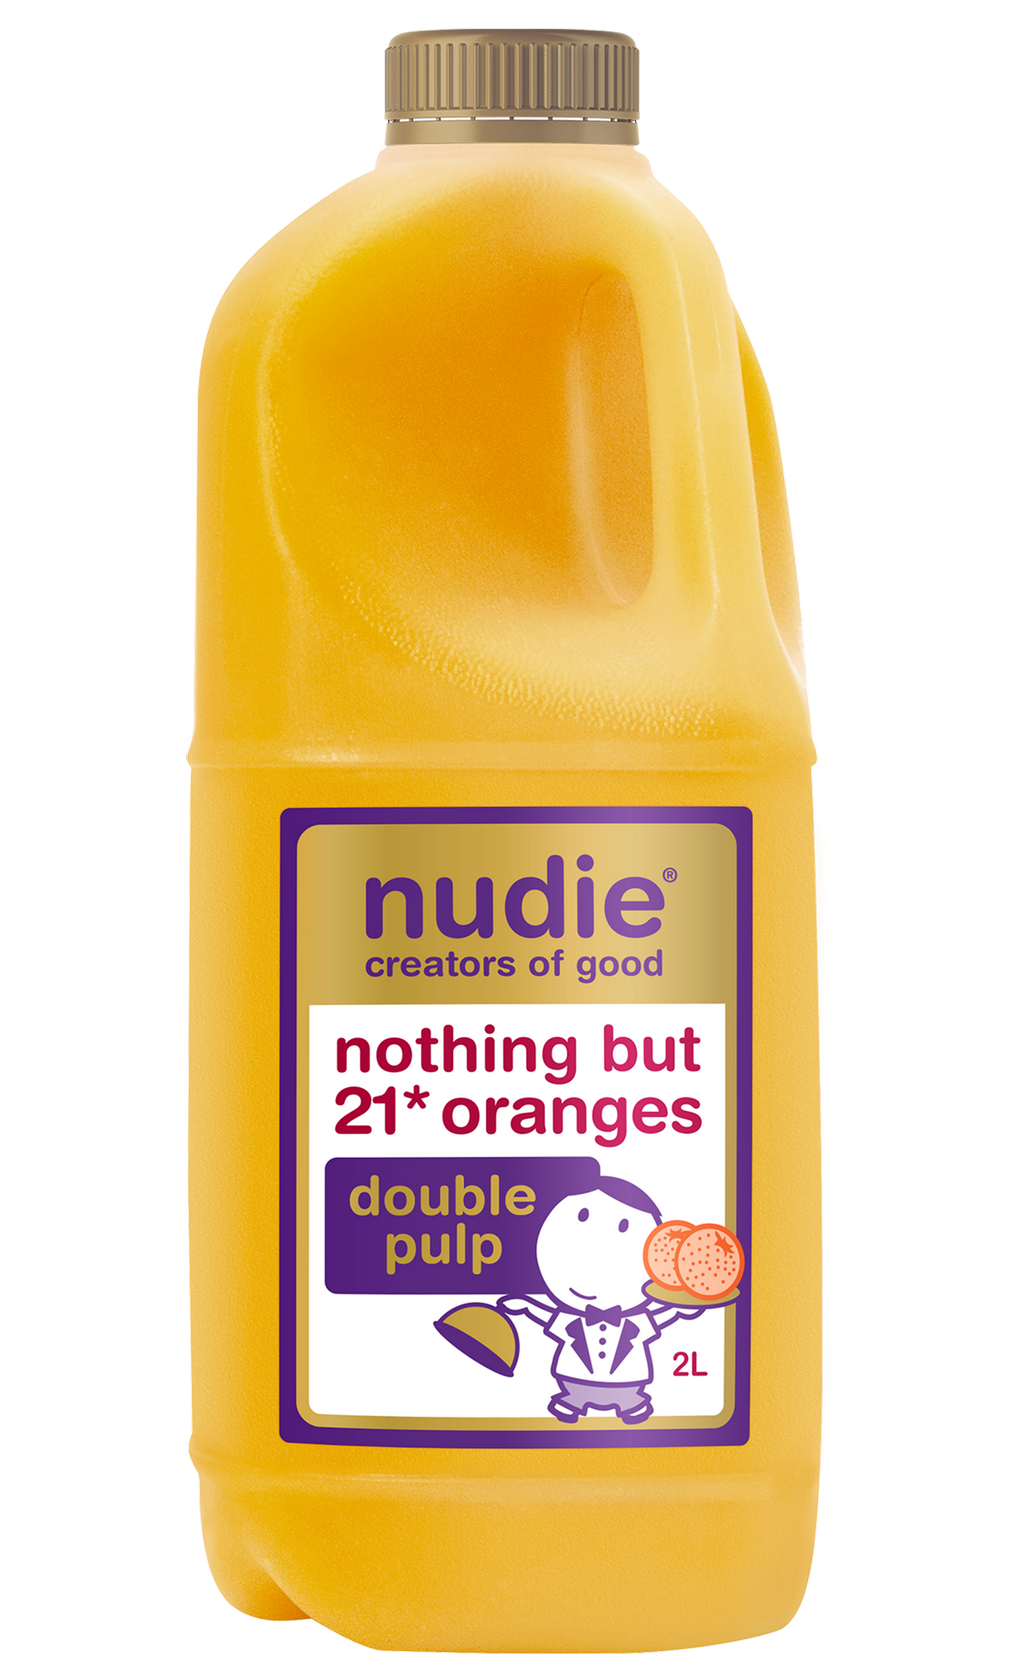 Nudie Orange Double Pulp 2L Front Label